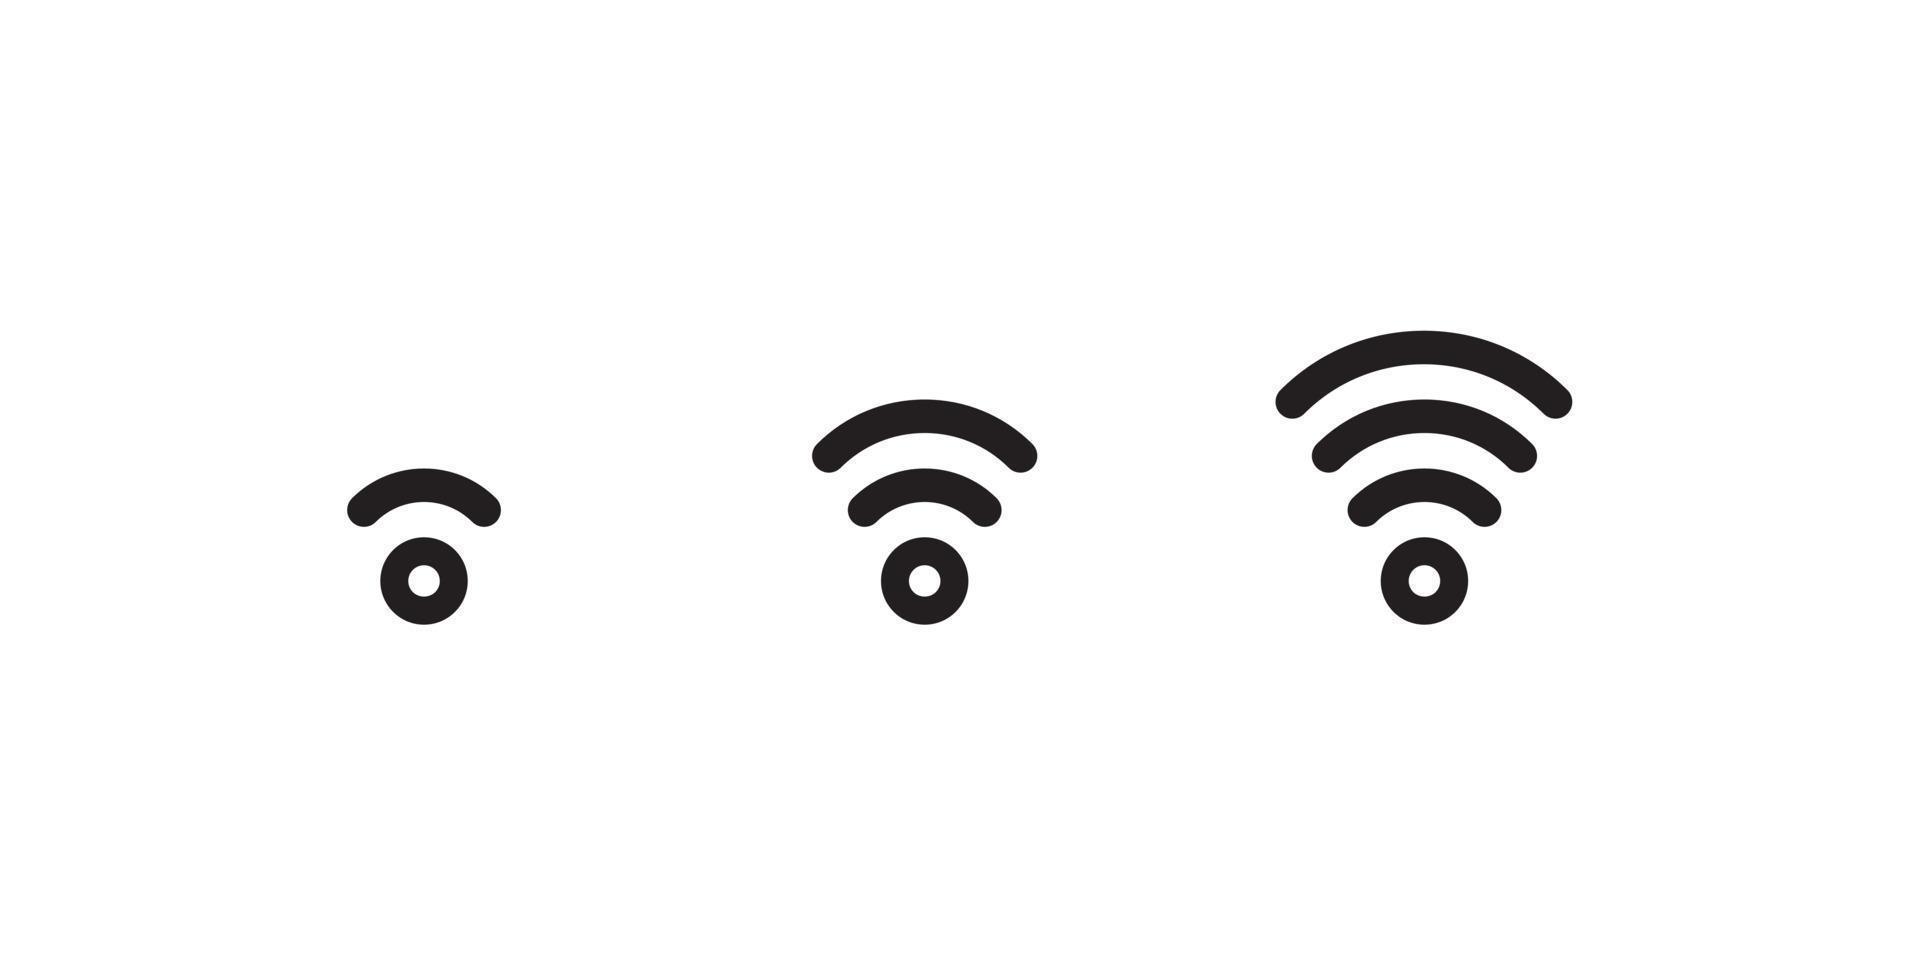 Wi-Fi-Signal, Symbolvektor für drahtloses Fidelity-Netzwerk in modernem Linienstil vektor